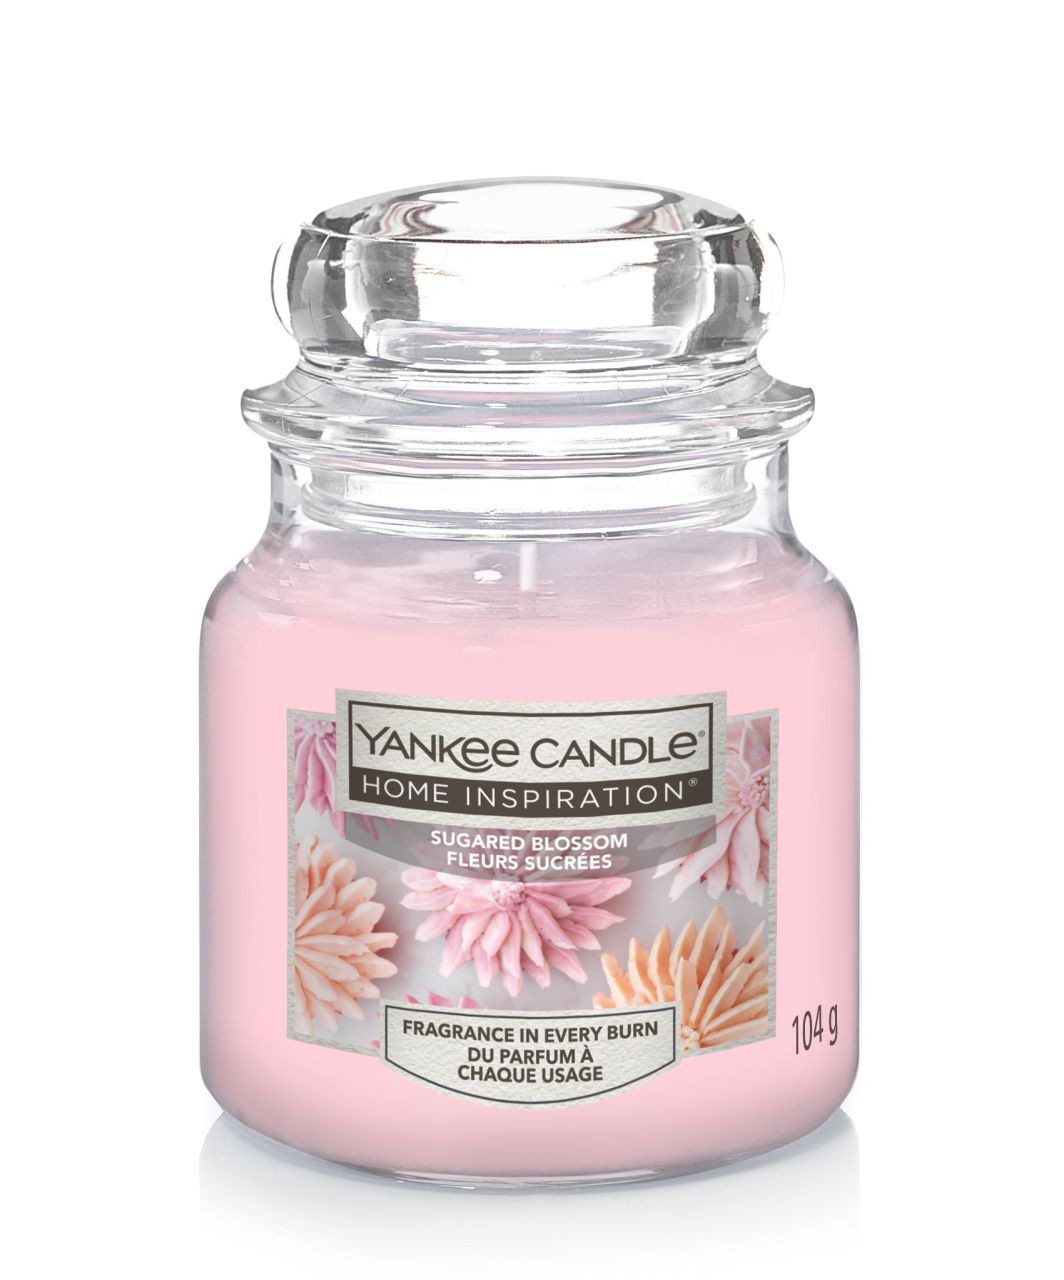 Yankee Candle Duftkerze Kleines Glas Sugared Blossom 104 g, rosa von Yankee Candle